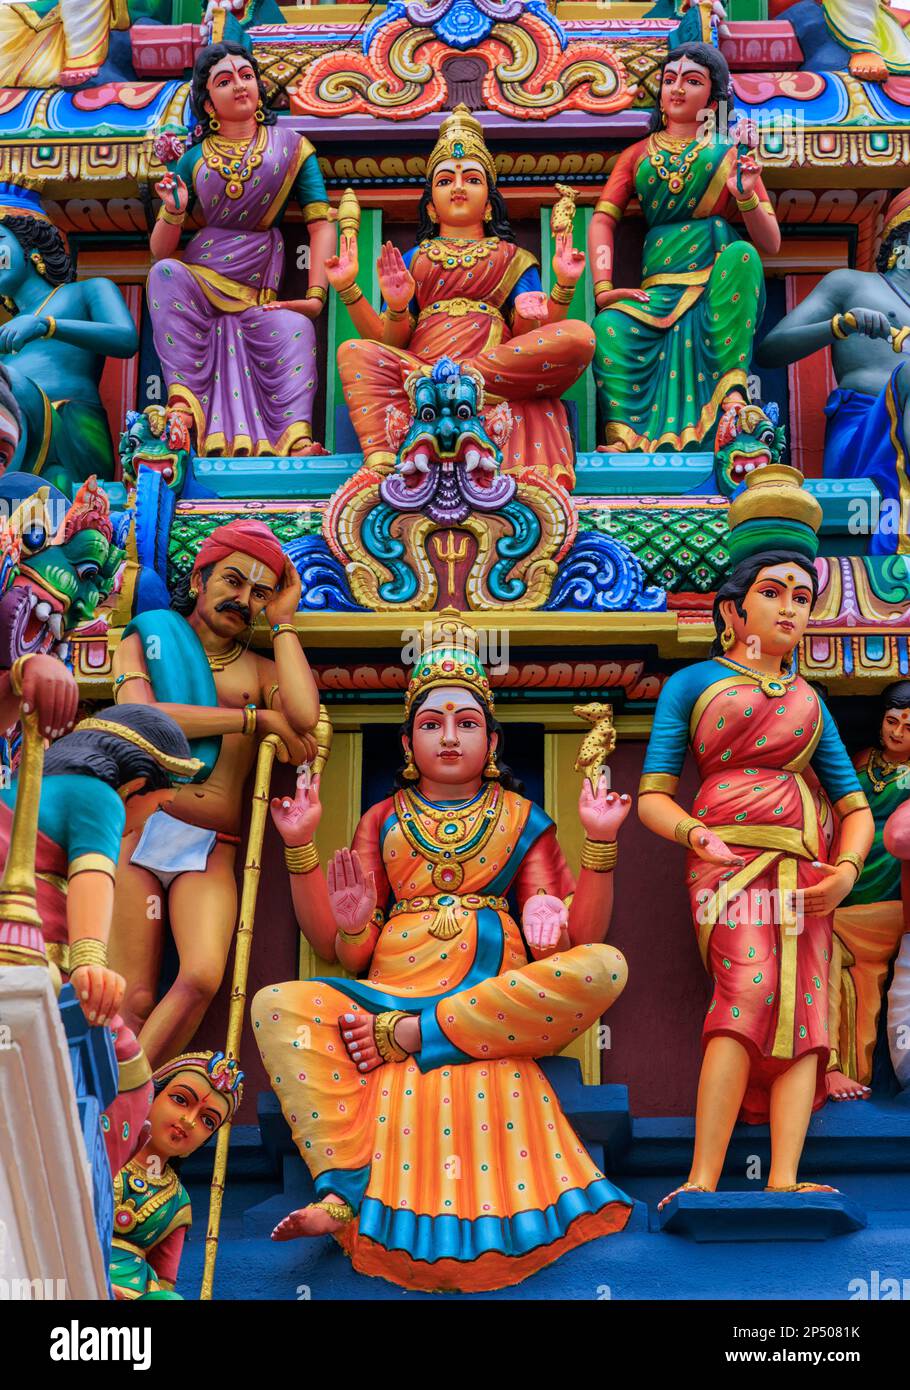 Ornate and colourful gopuram at the main entrance of Sri Mariamman Temple, Singapore Stock Photo